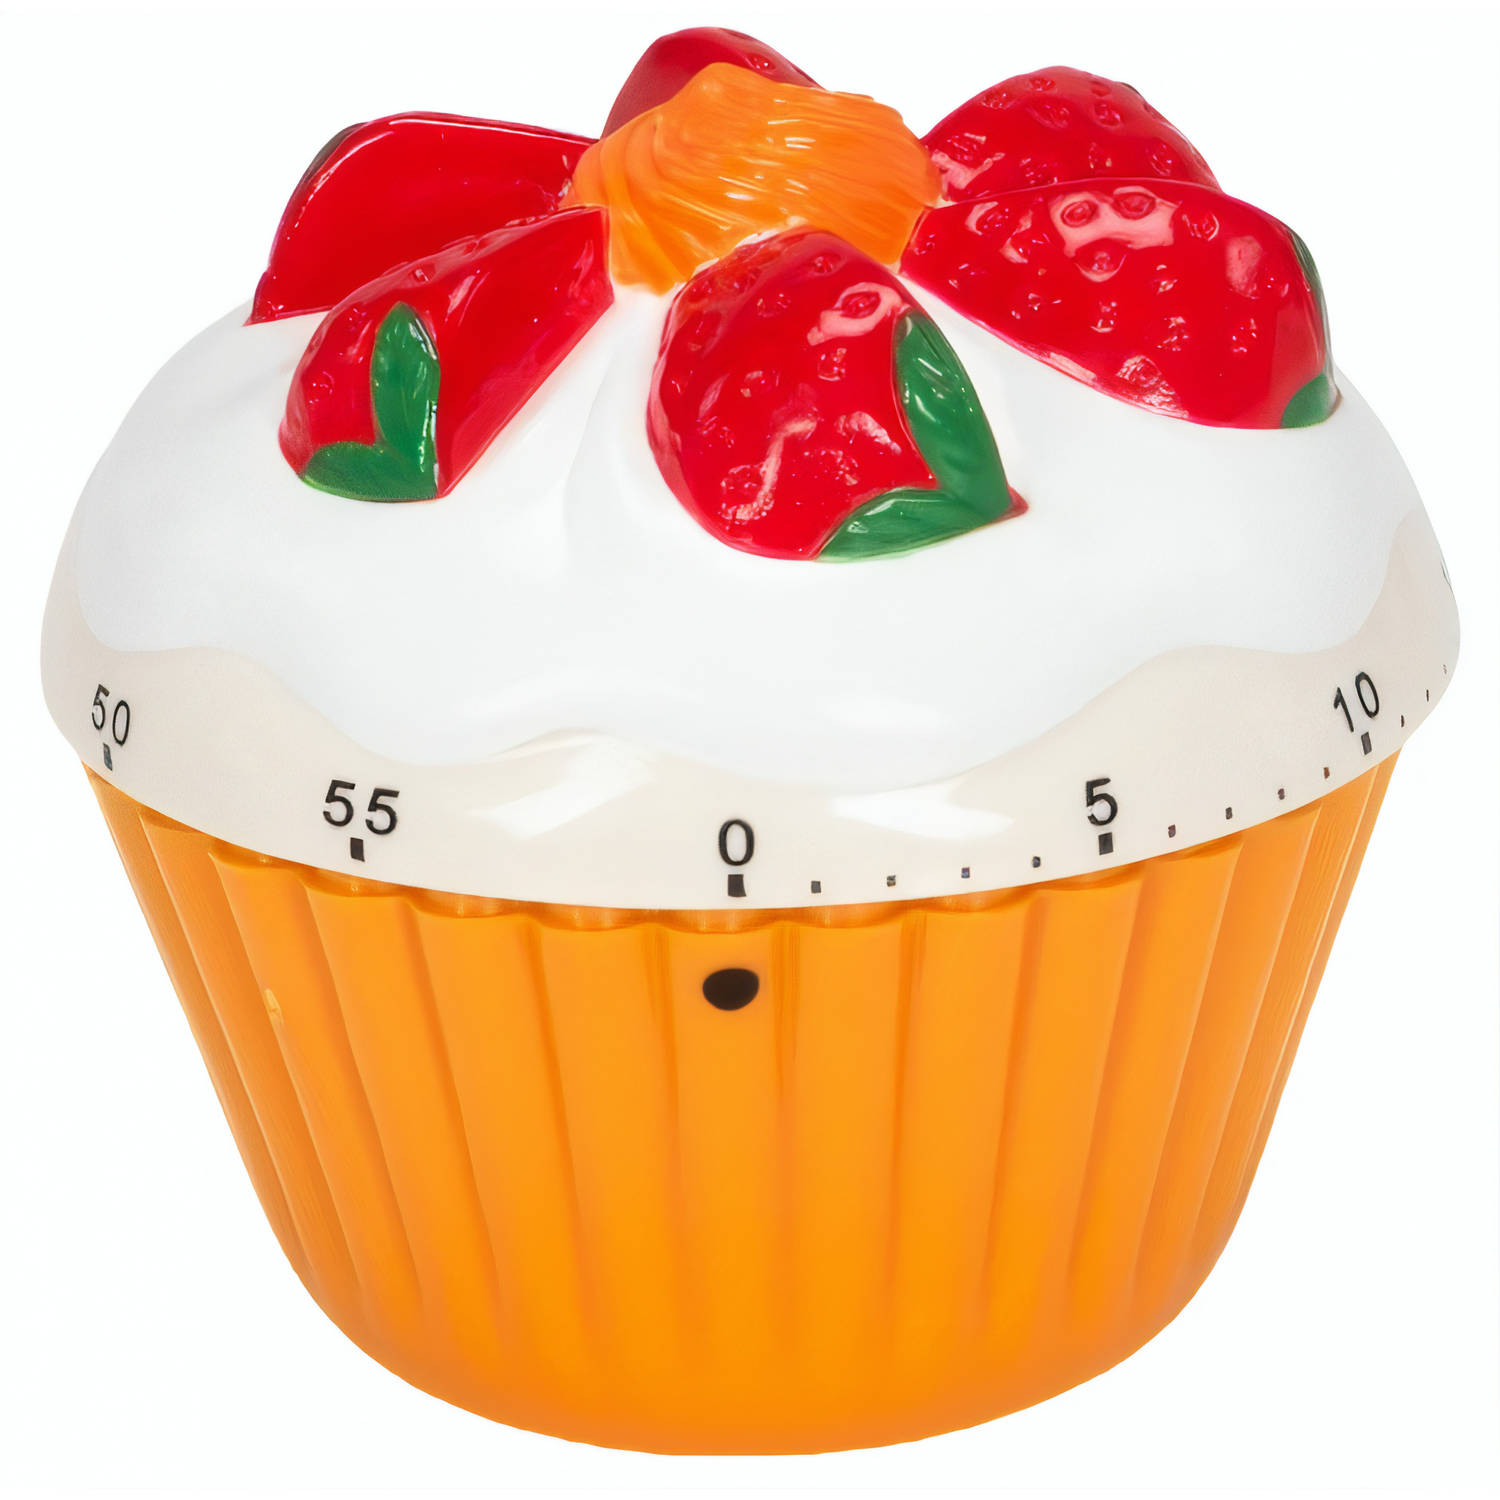 Patisse kookwekker cupcake 7,6 x 7,6 cm oranje-wit-rood